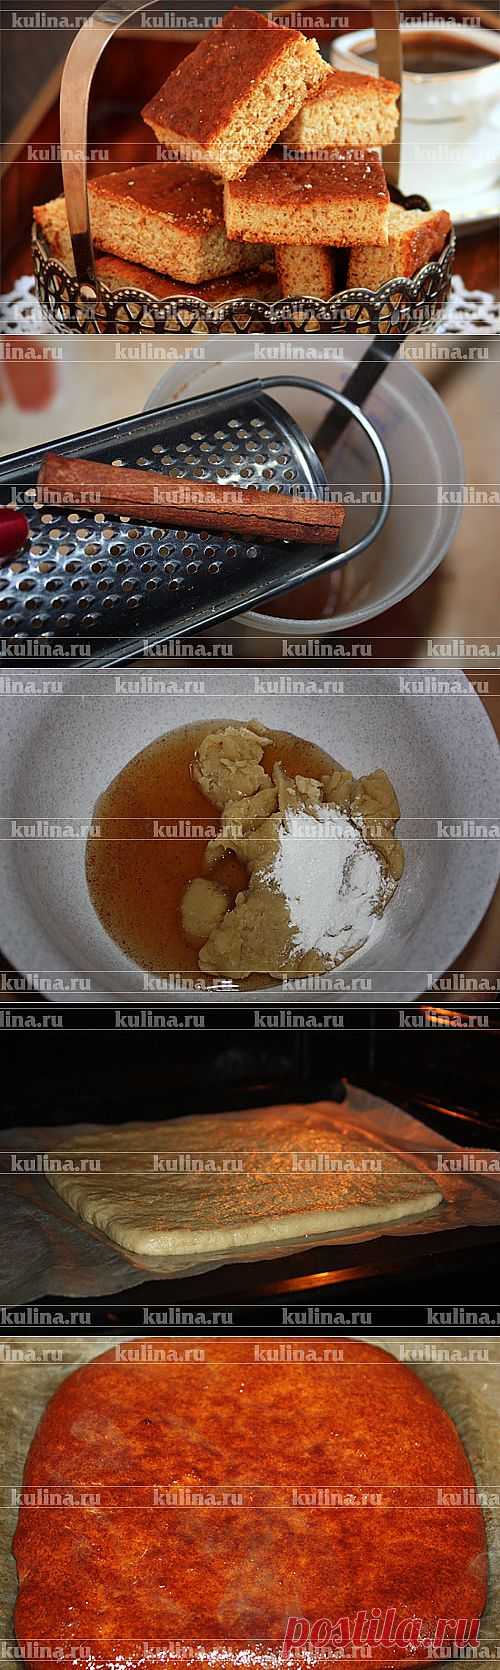 Коврижка медовая – рецепт приготовления с фото от Kulina.Ru